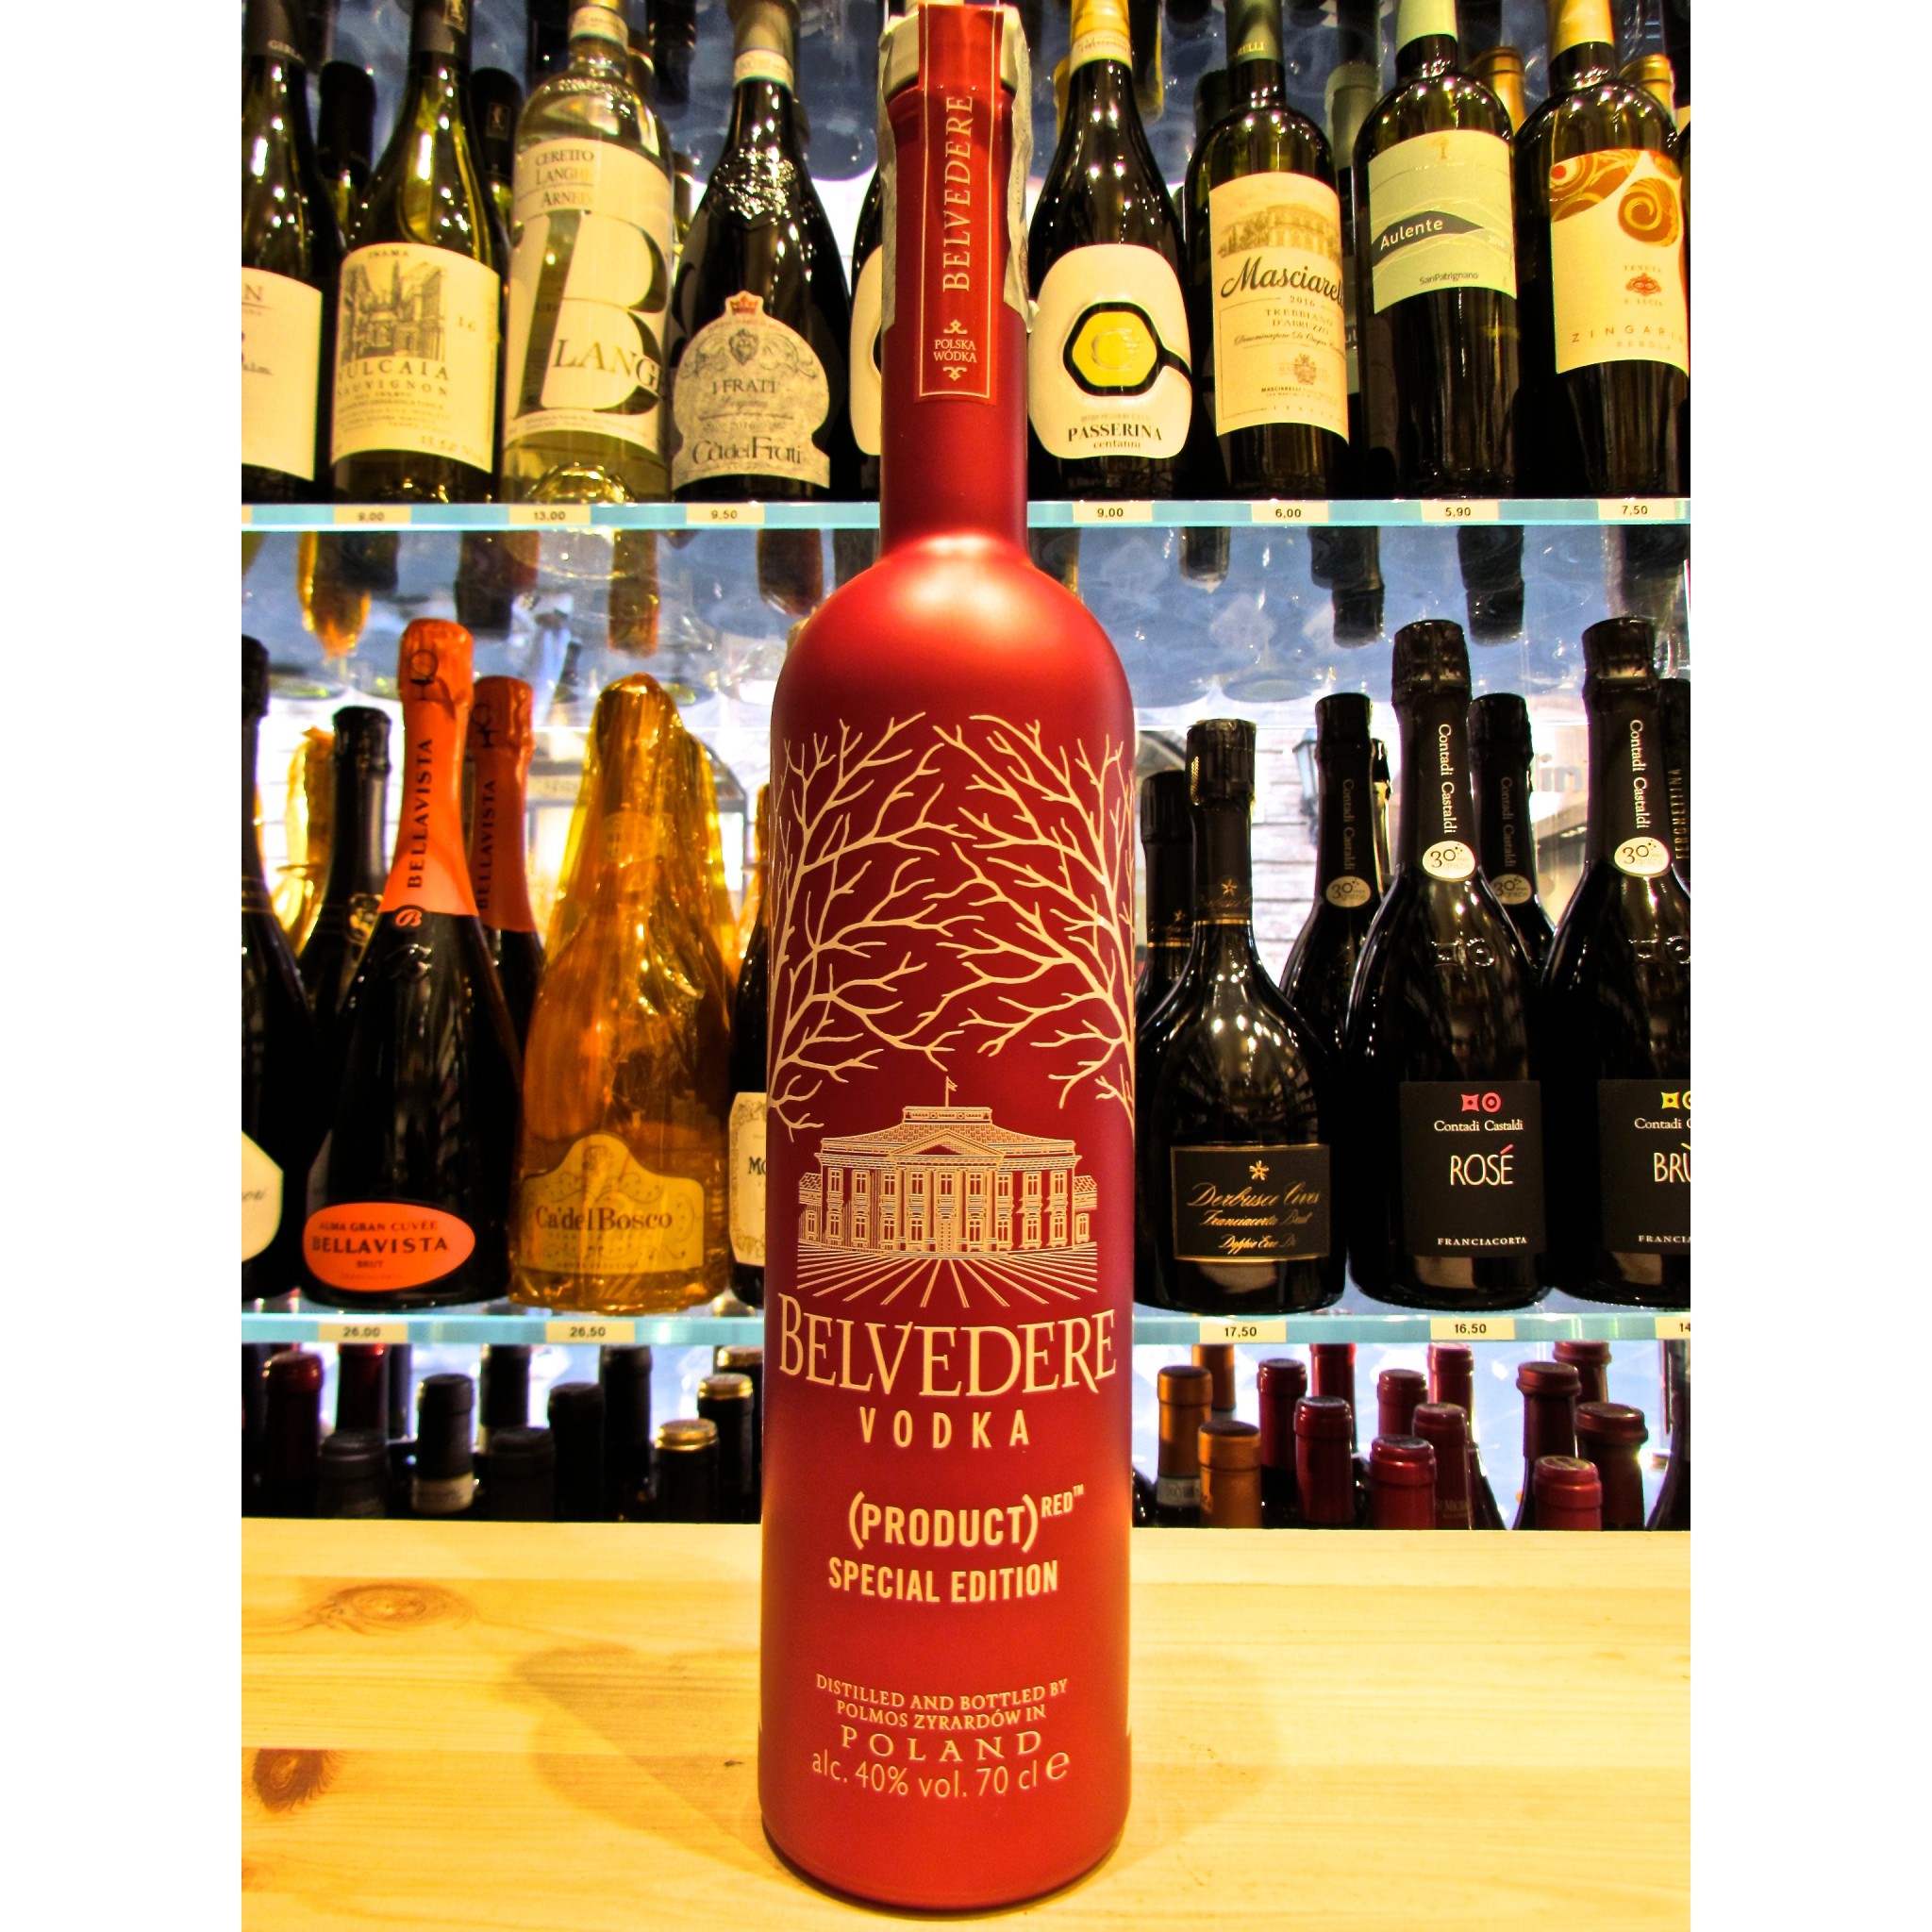 Belvedere Vodka Red Limited Edition by Laolu 1 Liter - Glendale Liquor Store